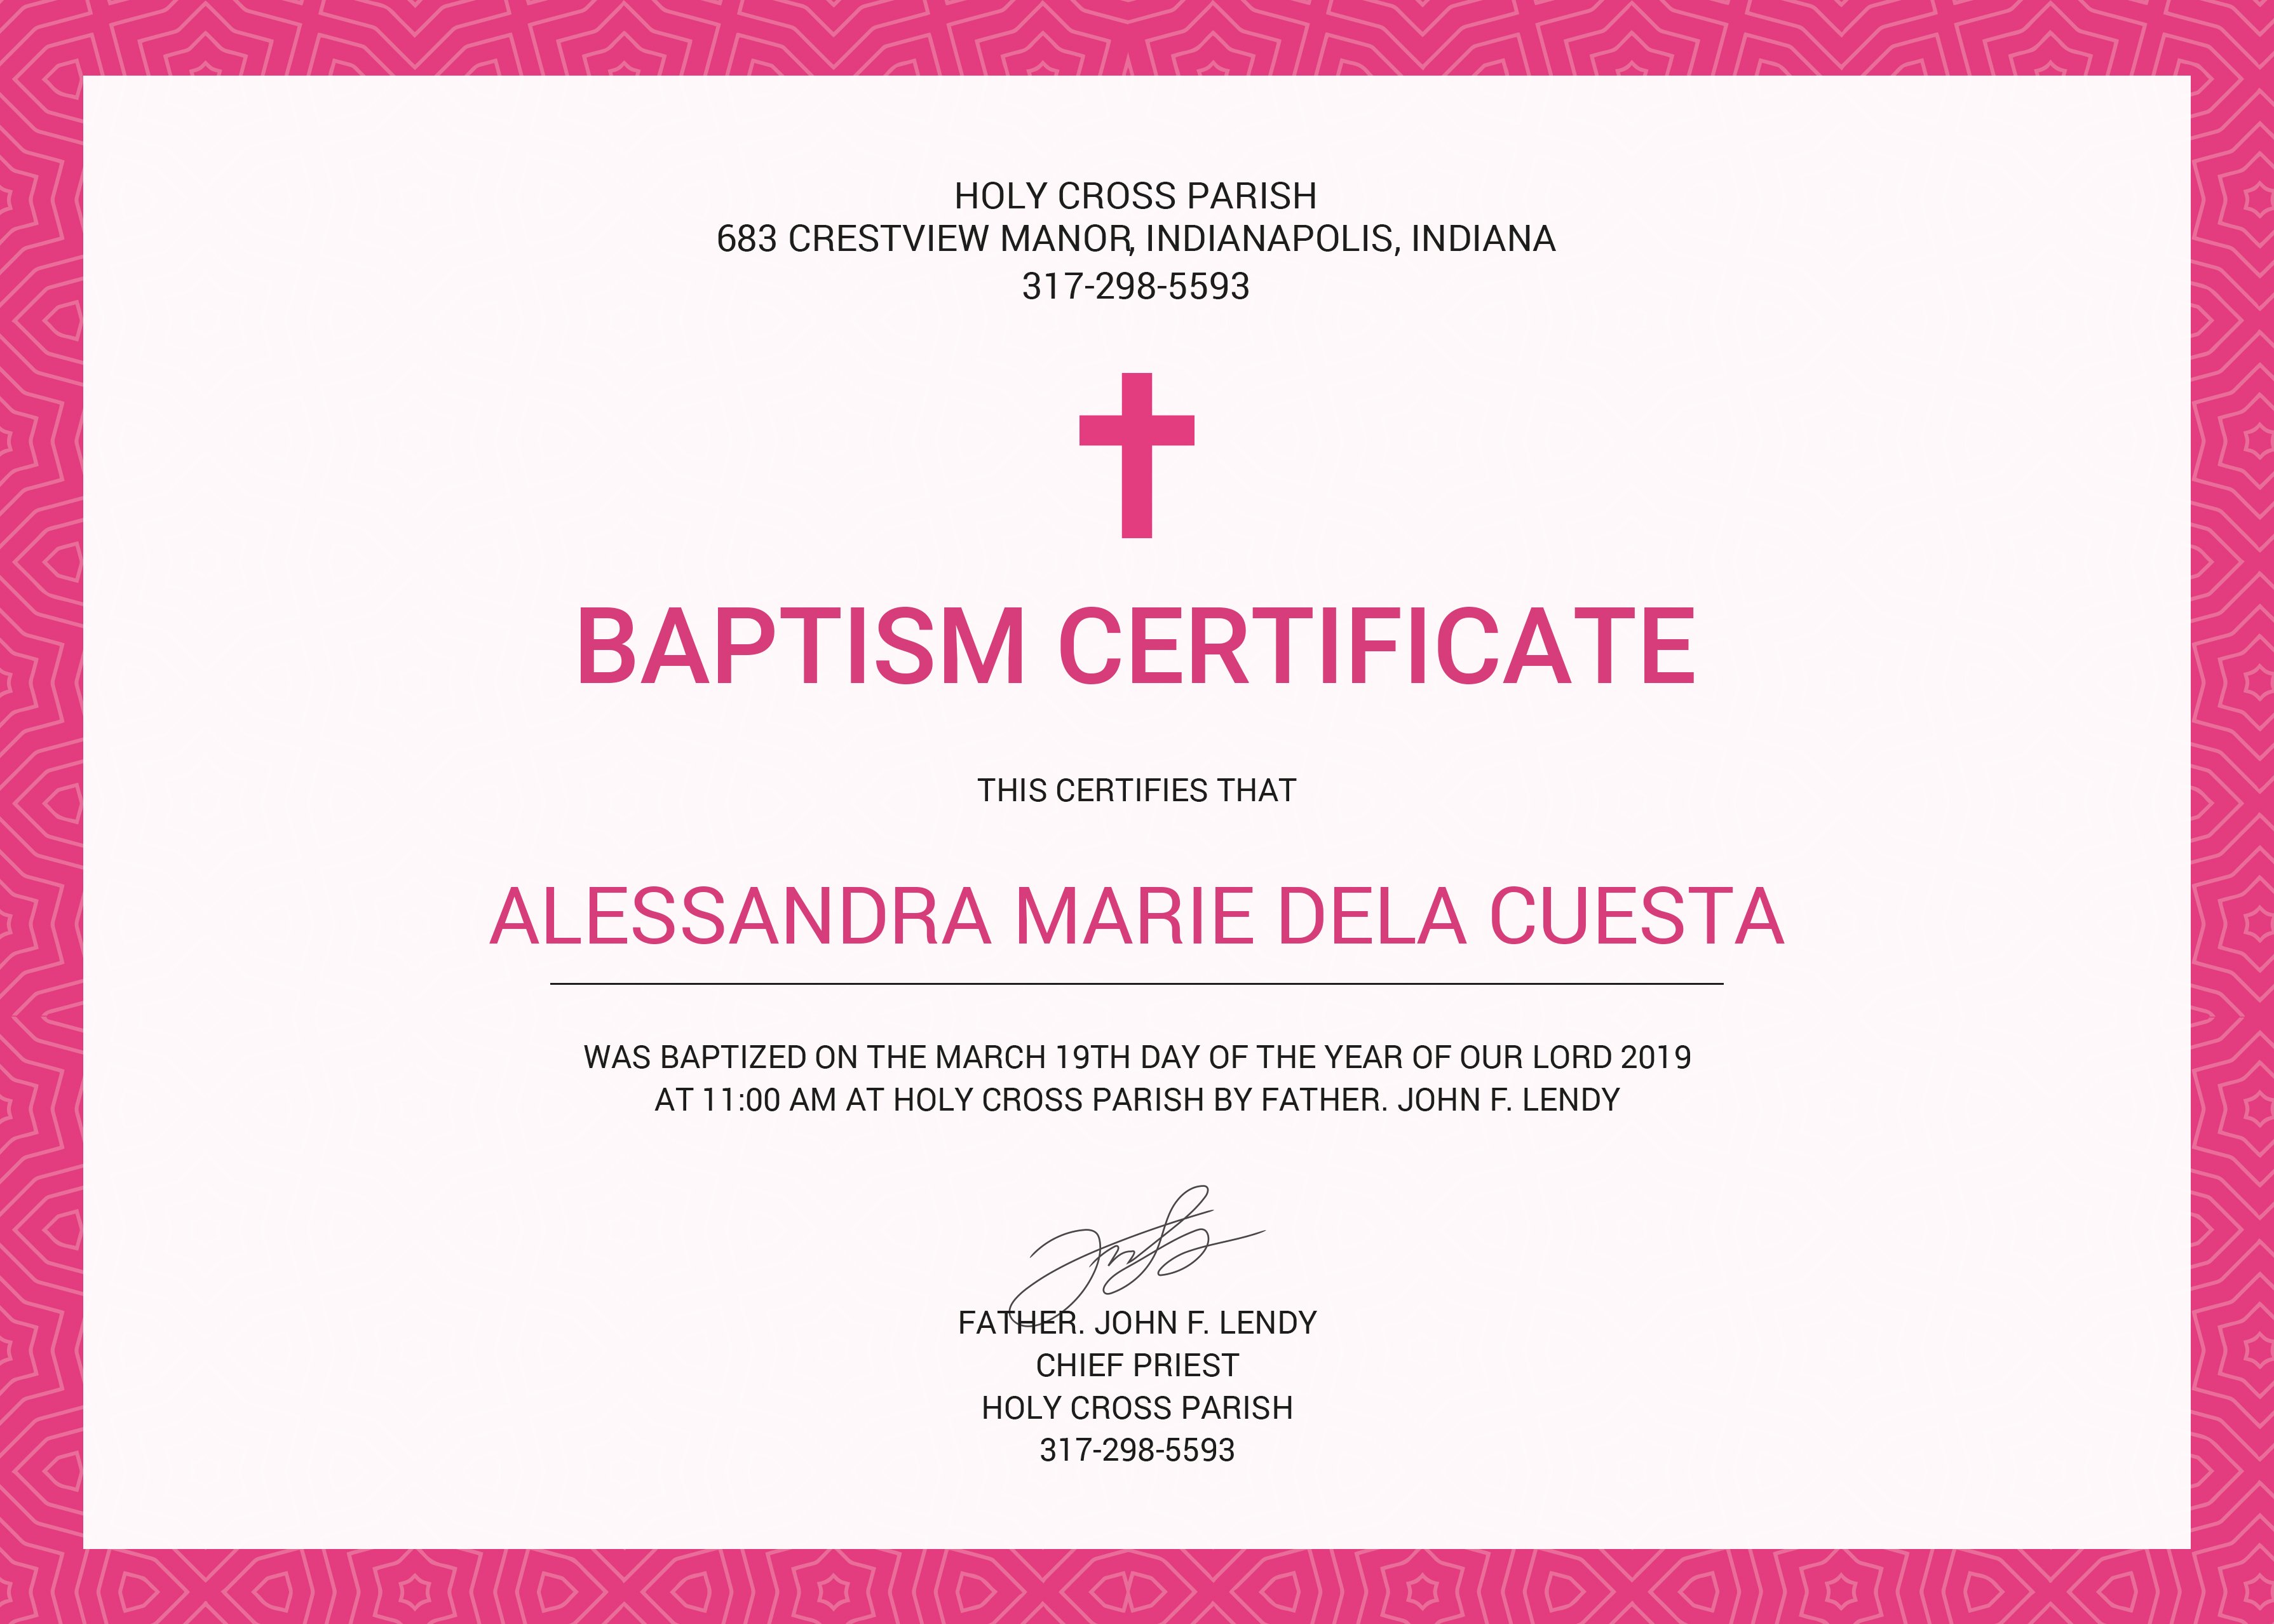 Sample Baptism Certificate